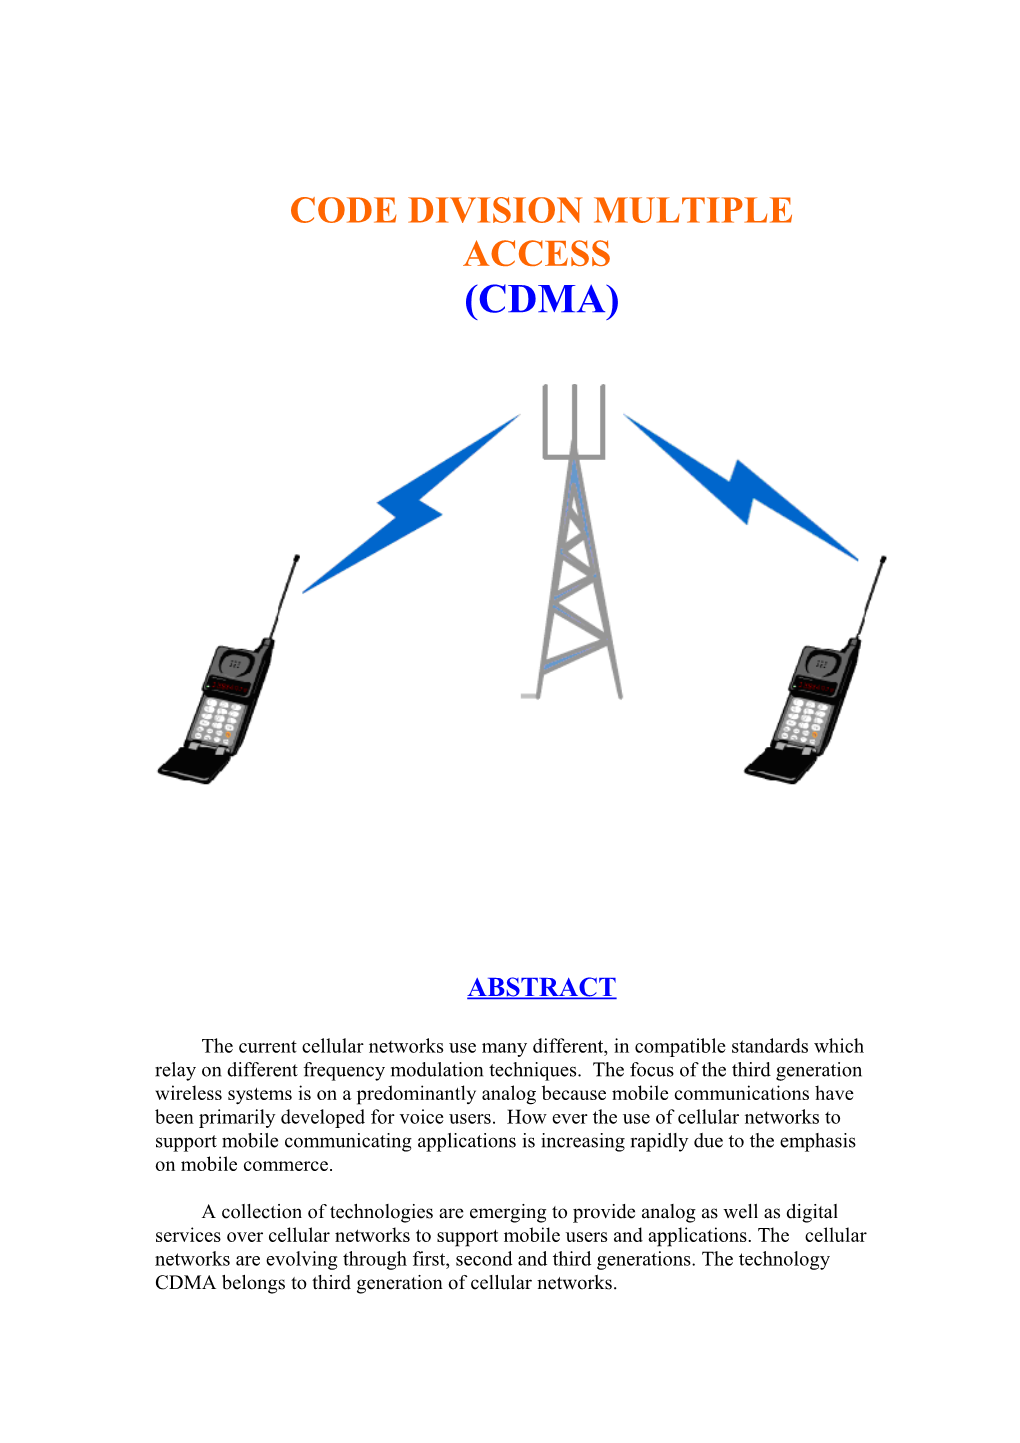 Code Division Multiple Access - CDMA